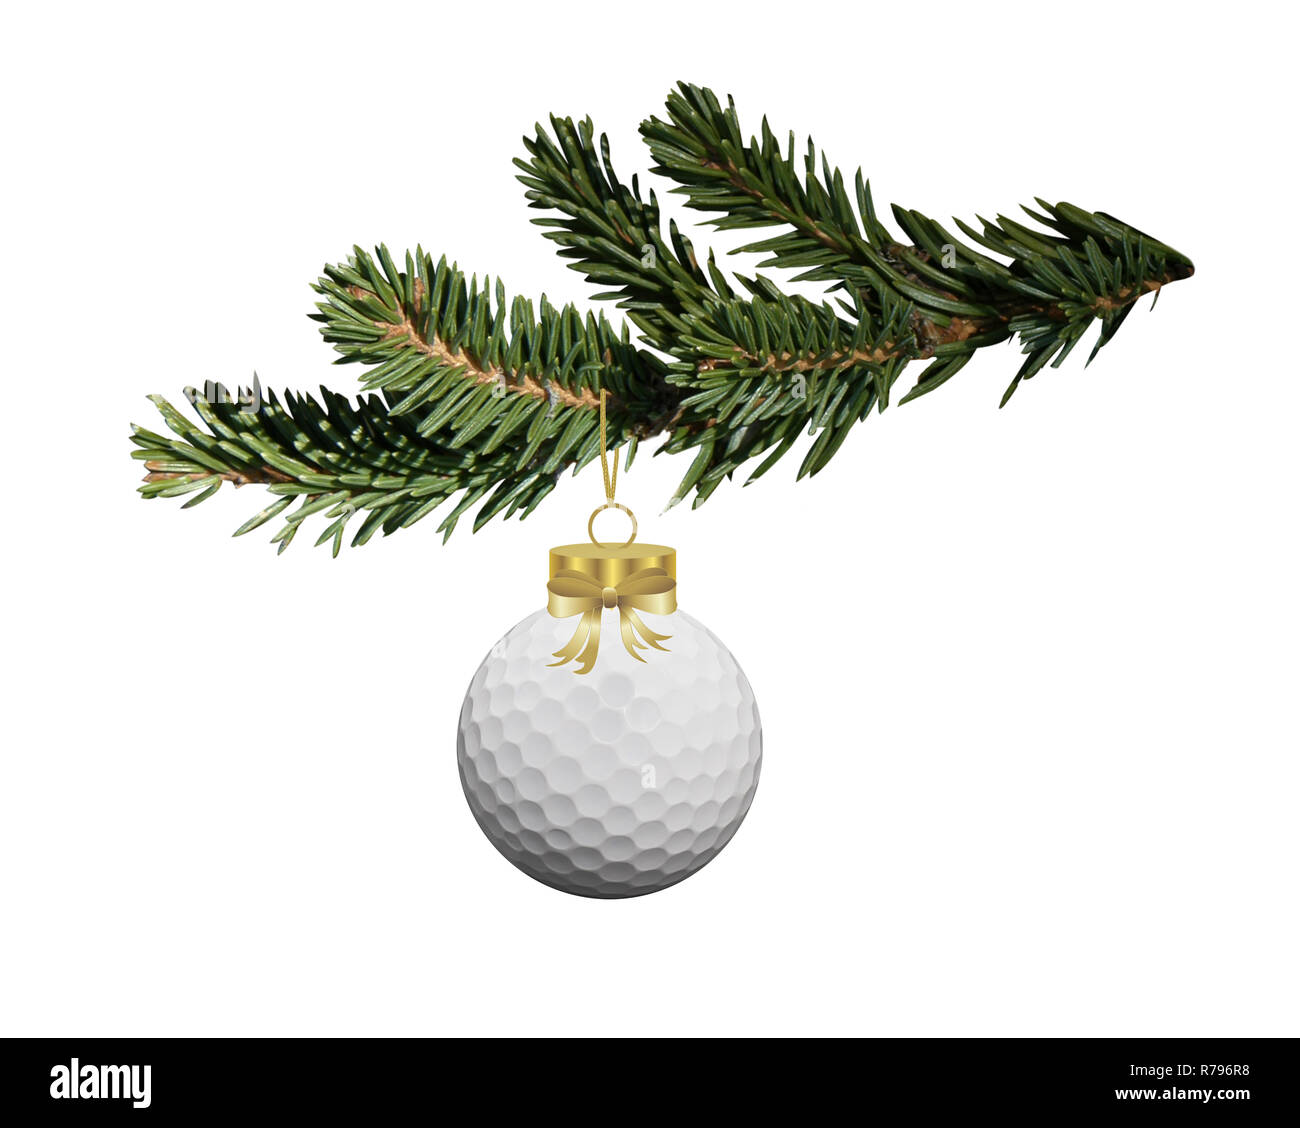 Golf christmas ball hanging on the fir branch Stock Photo